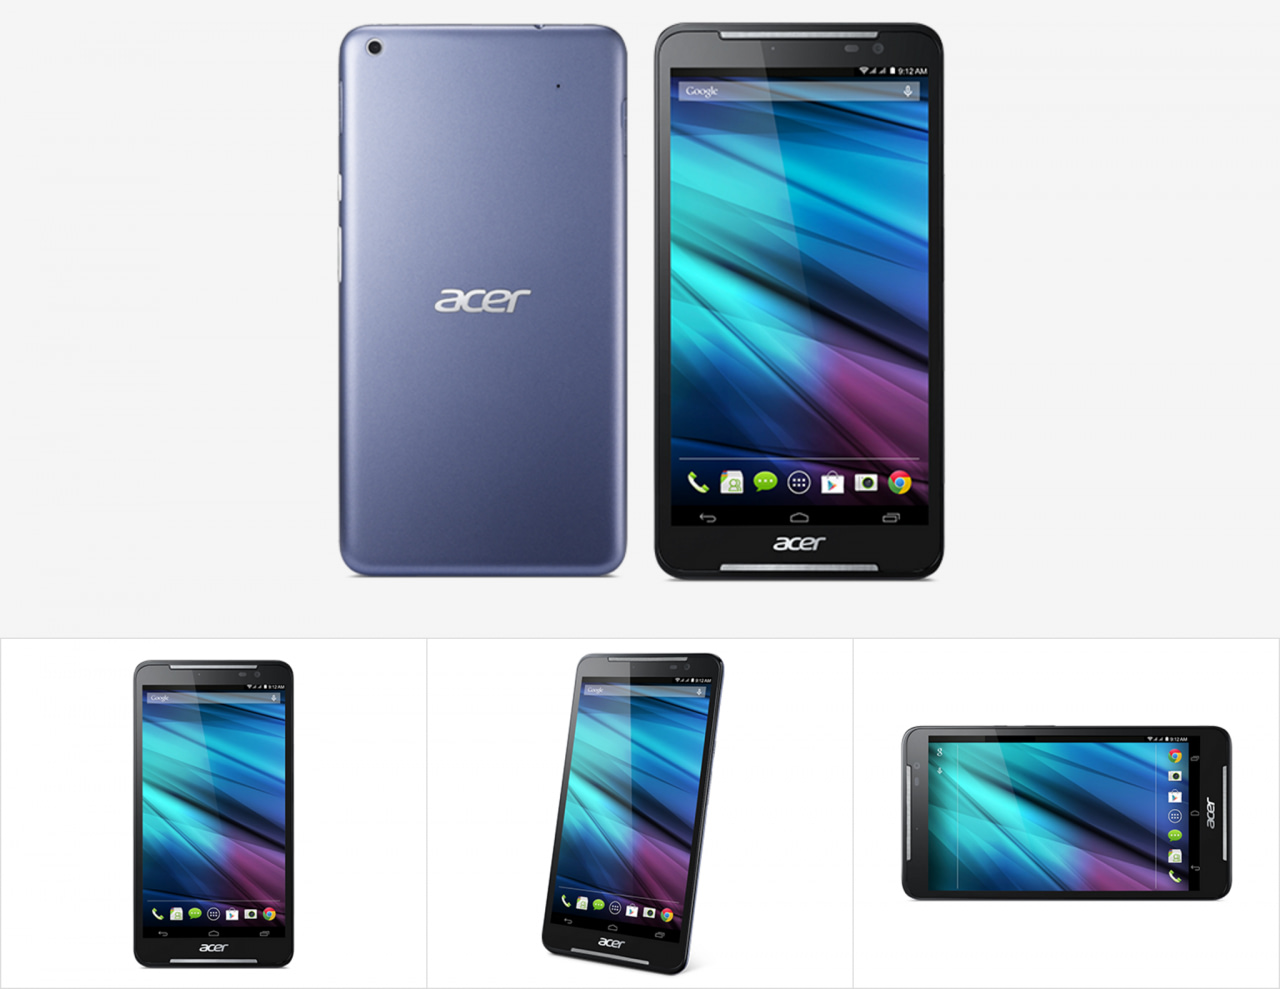 Acer-Iconia-Talk-S-1280x989 (1)